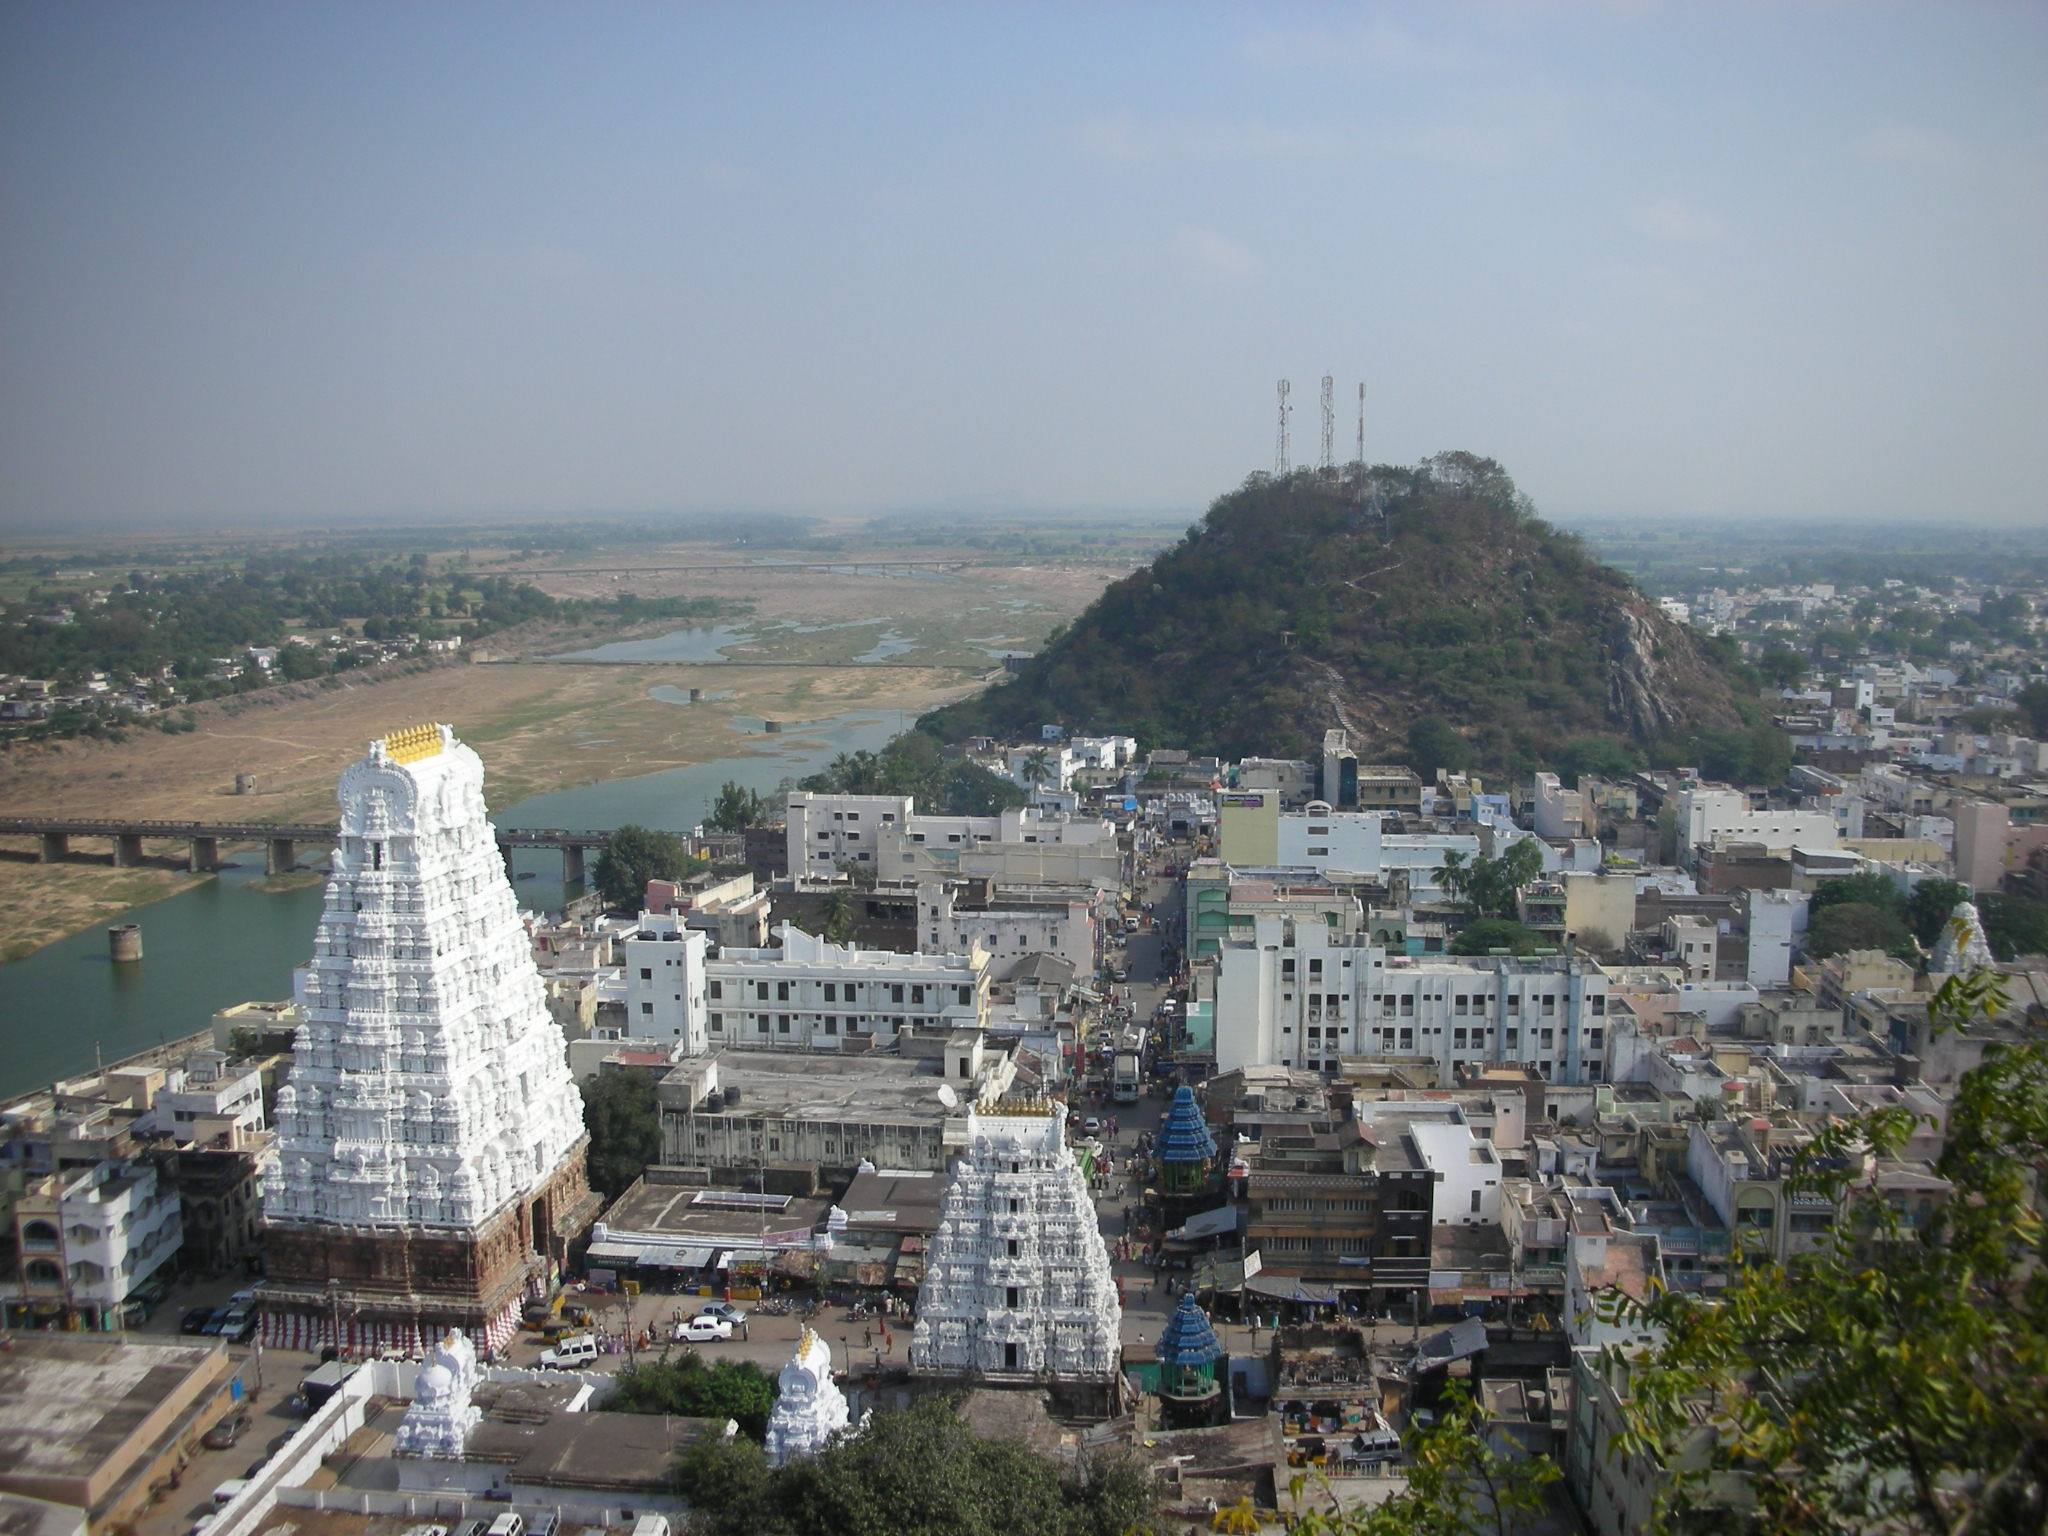 Sri Kalahasteeswara Swami Temple, Srikalahasti, Andhra Pradesh